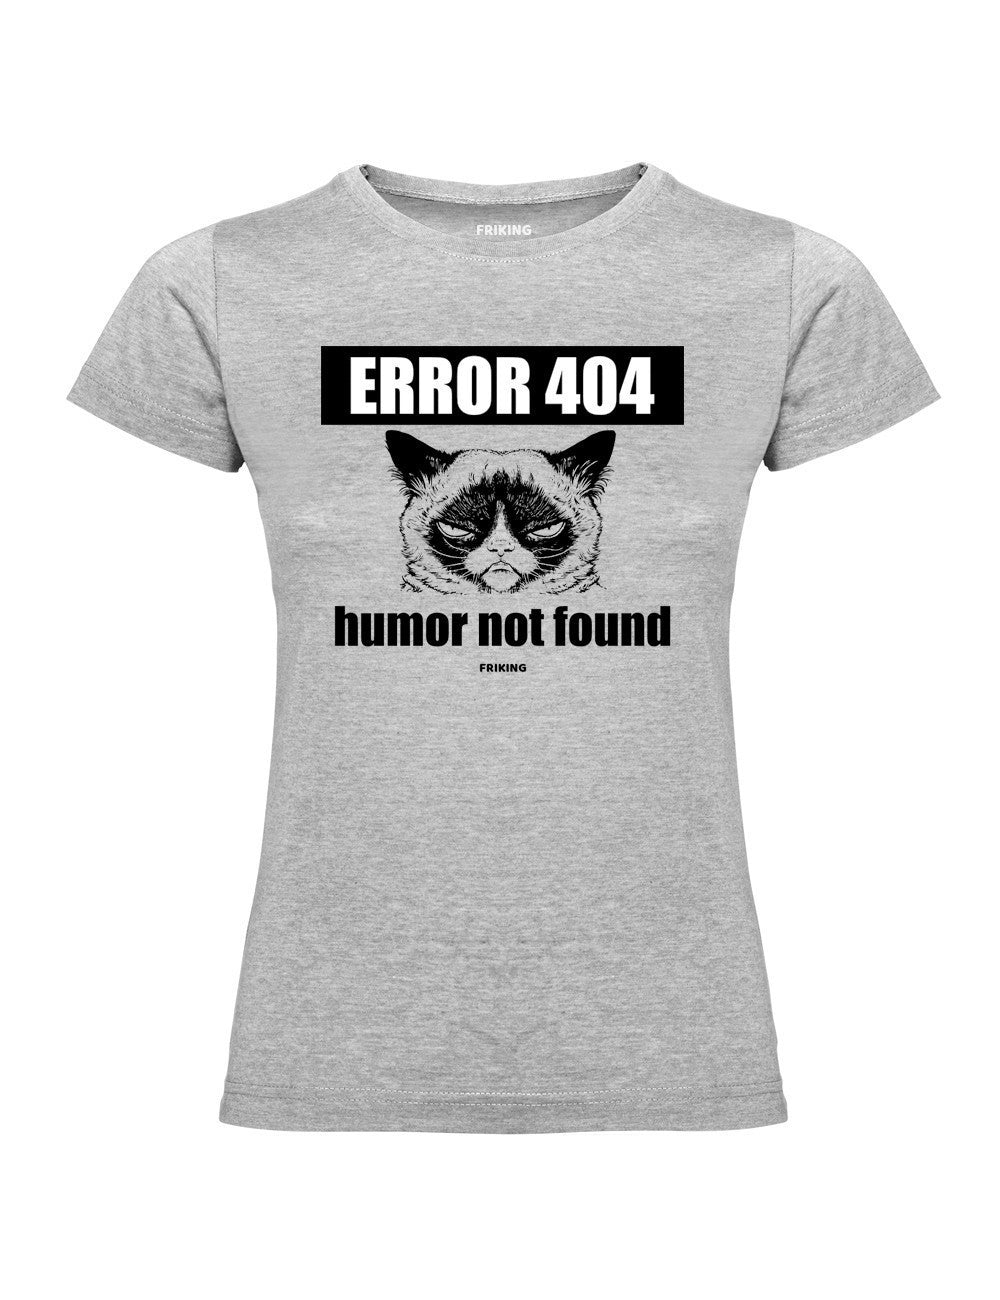  Error 404 Humor not found 